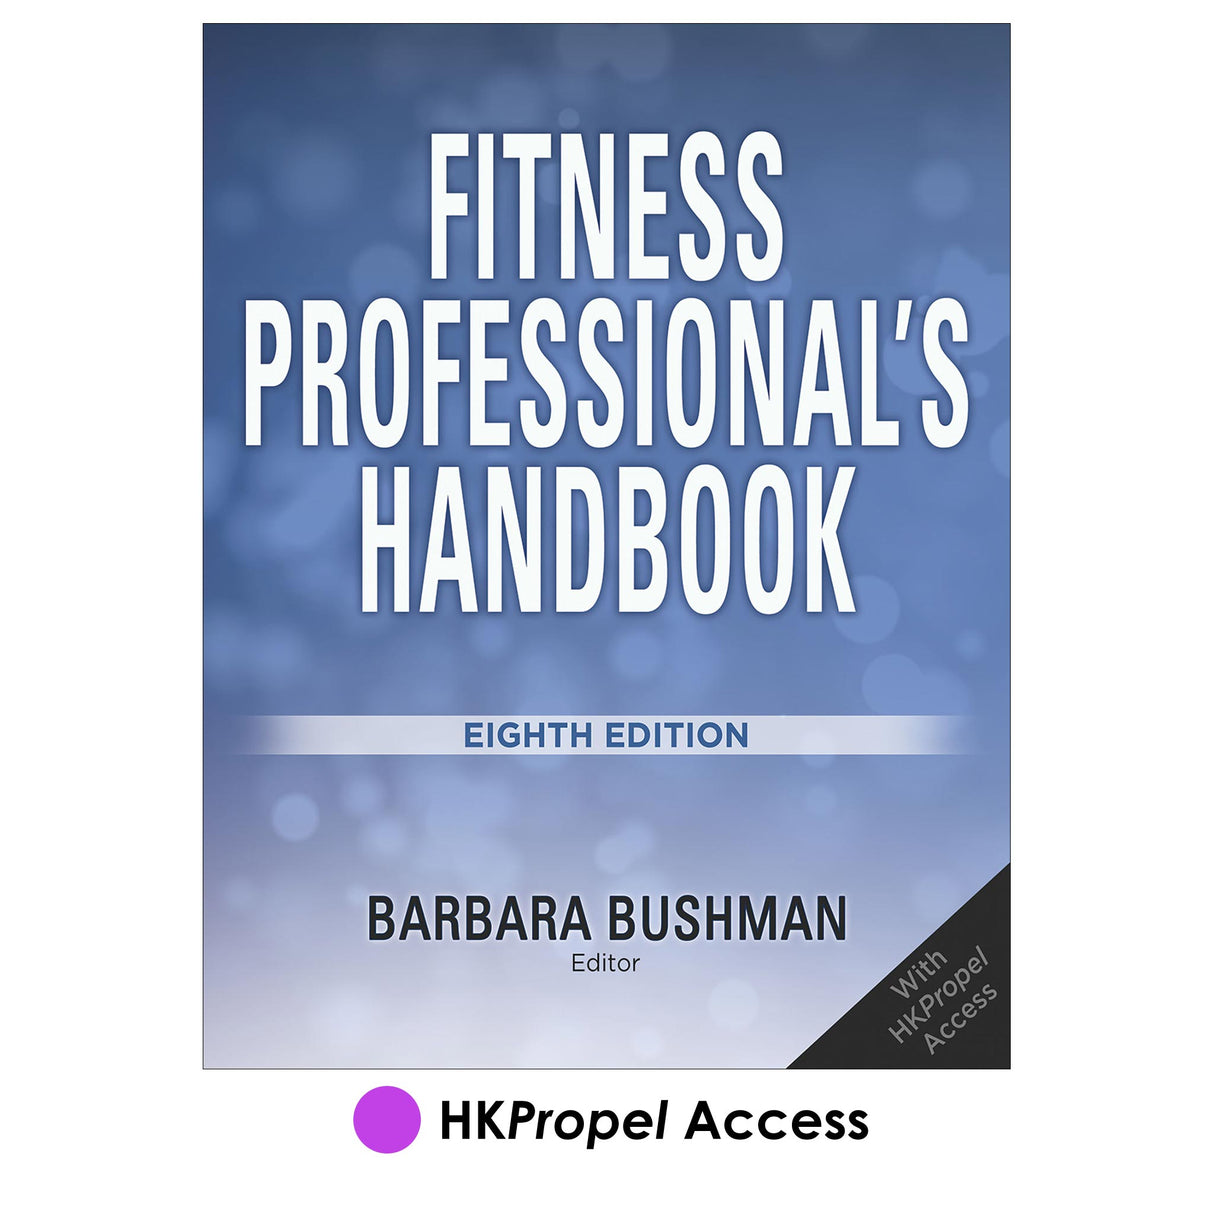 Fitness Professional's Handbook 8th Edition HKPropel Access